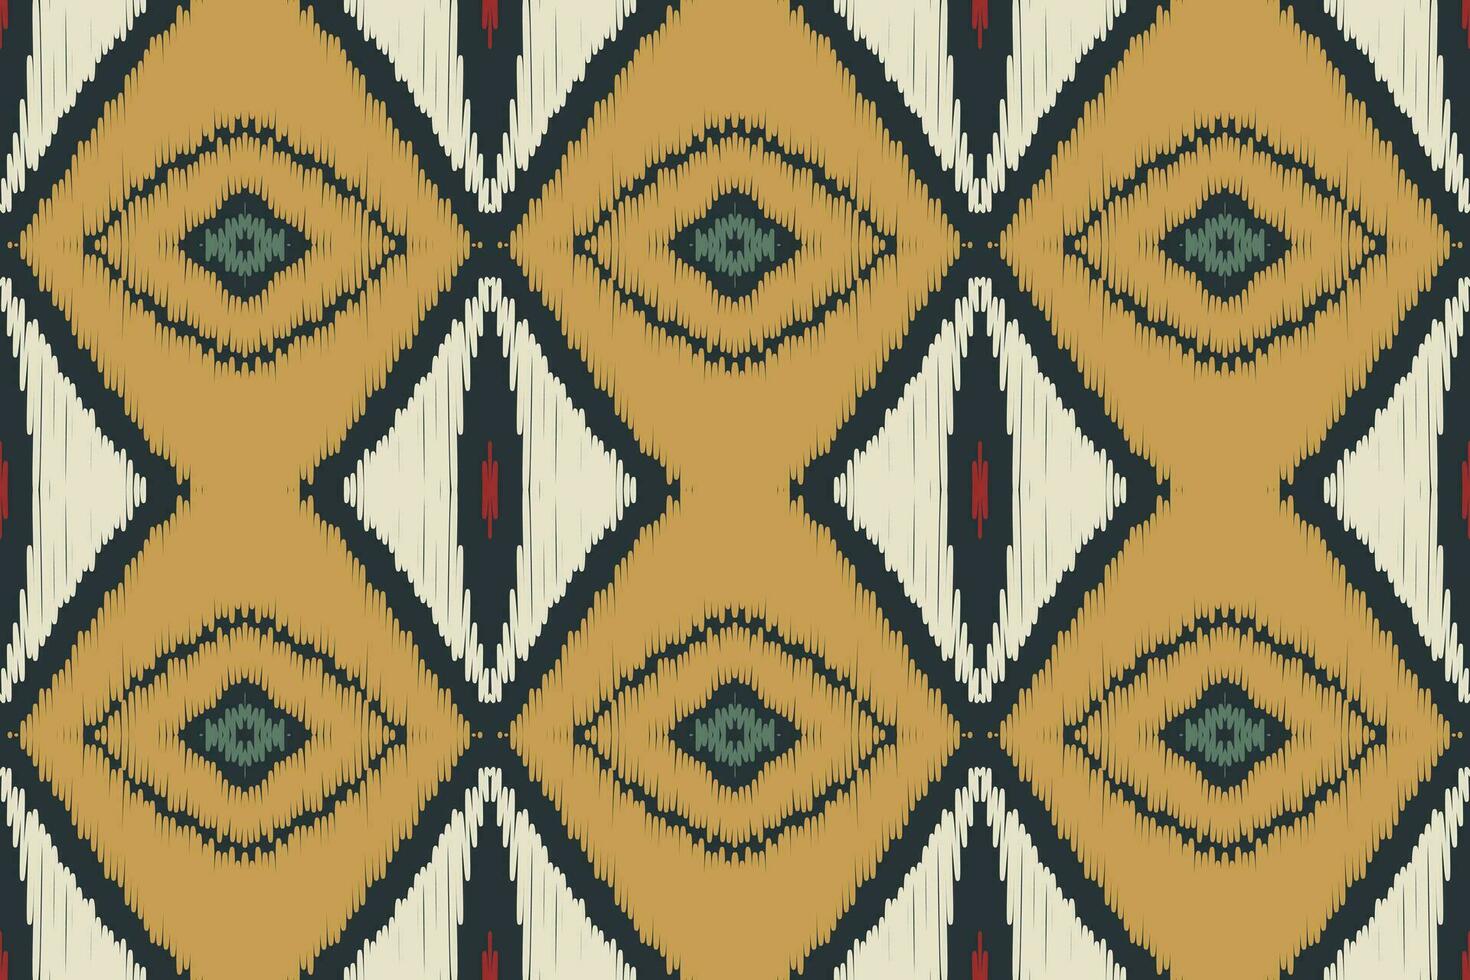 ikat floral cachemir bordado antecedentes. ikat vector geométrico étnico oriental modelo tradicional. ikat azteca estilo resumen diseño para impresión textura,tela,sari,sari,alfombra.